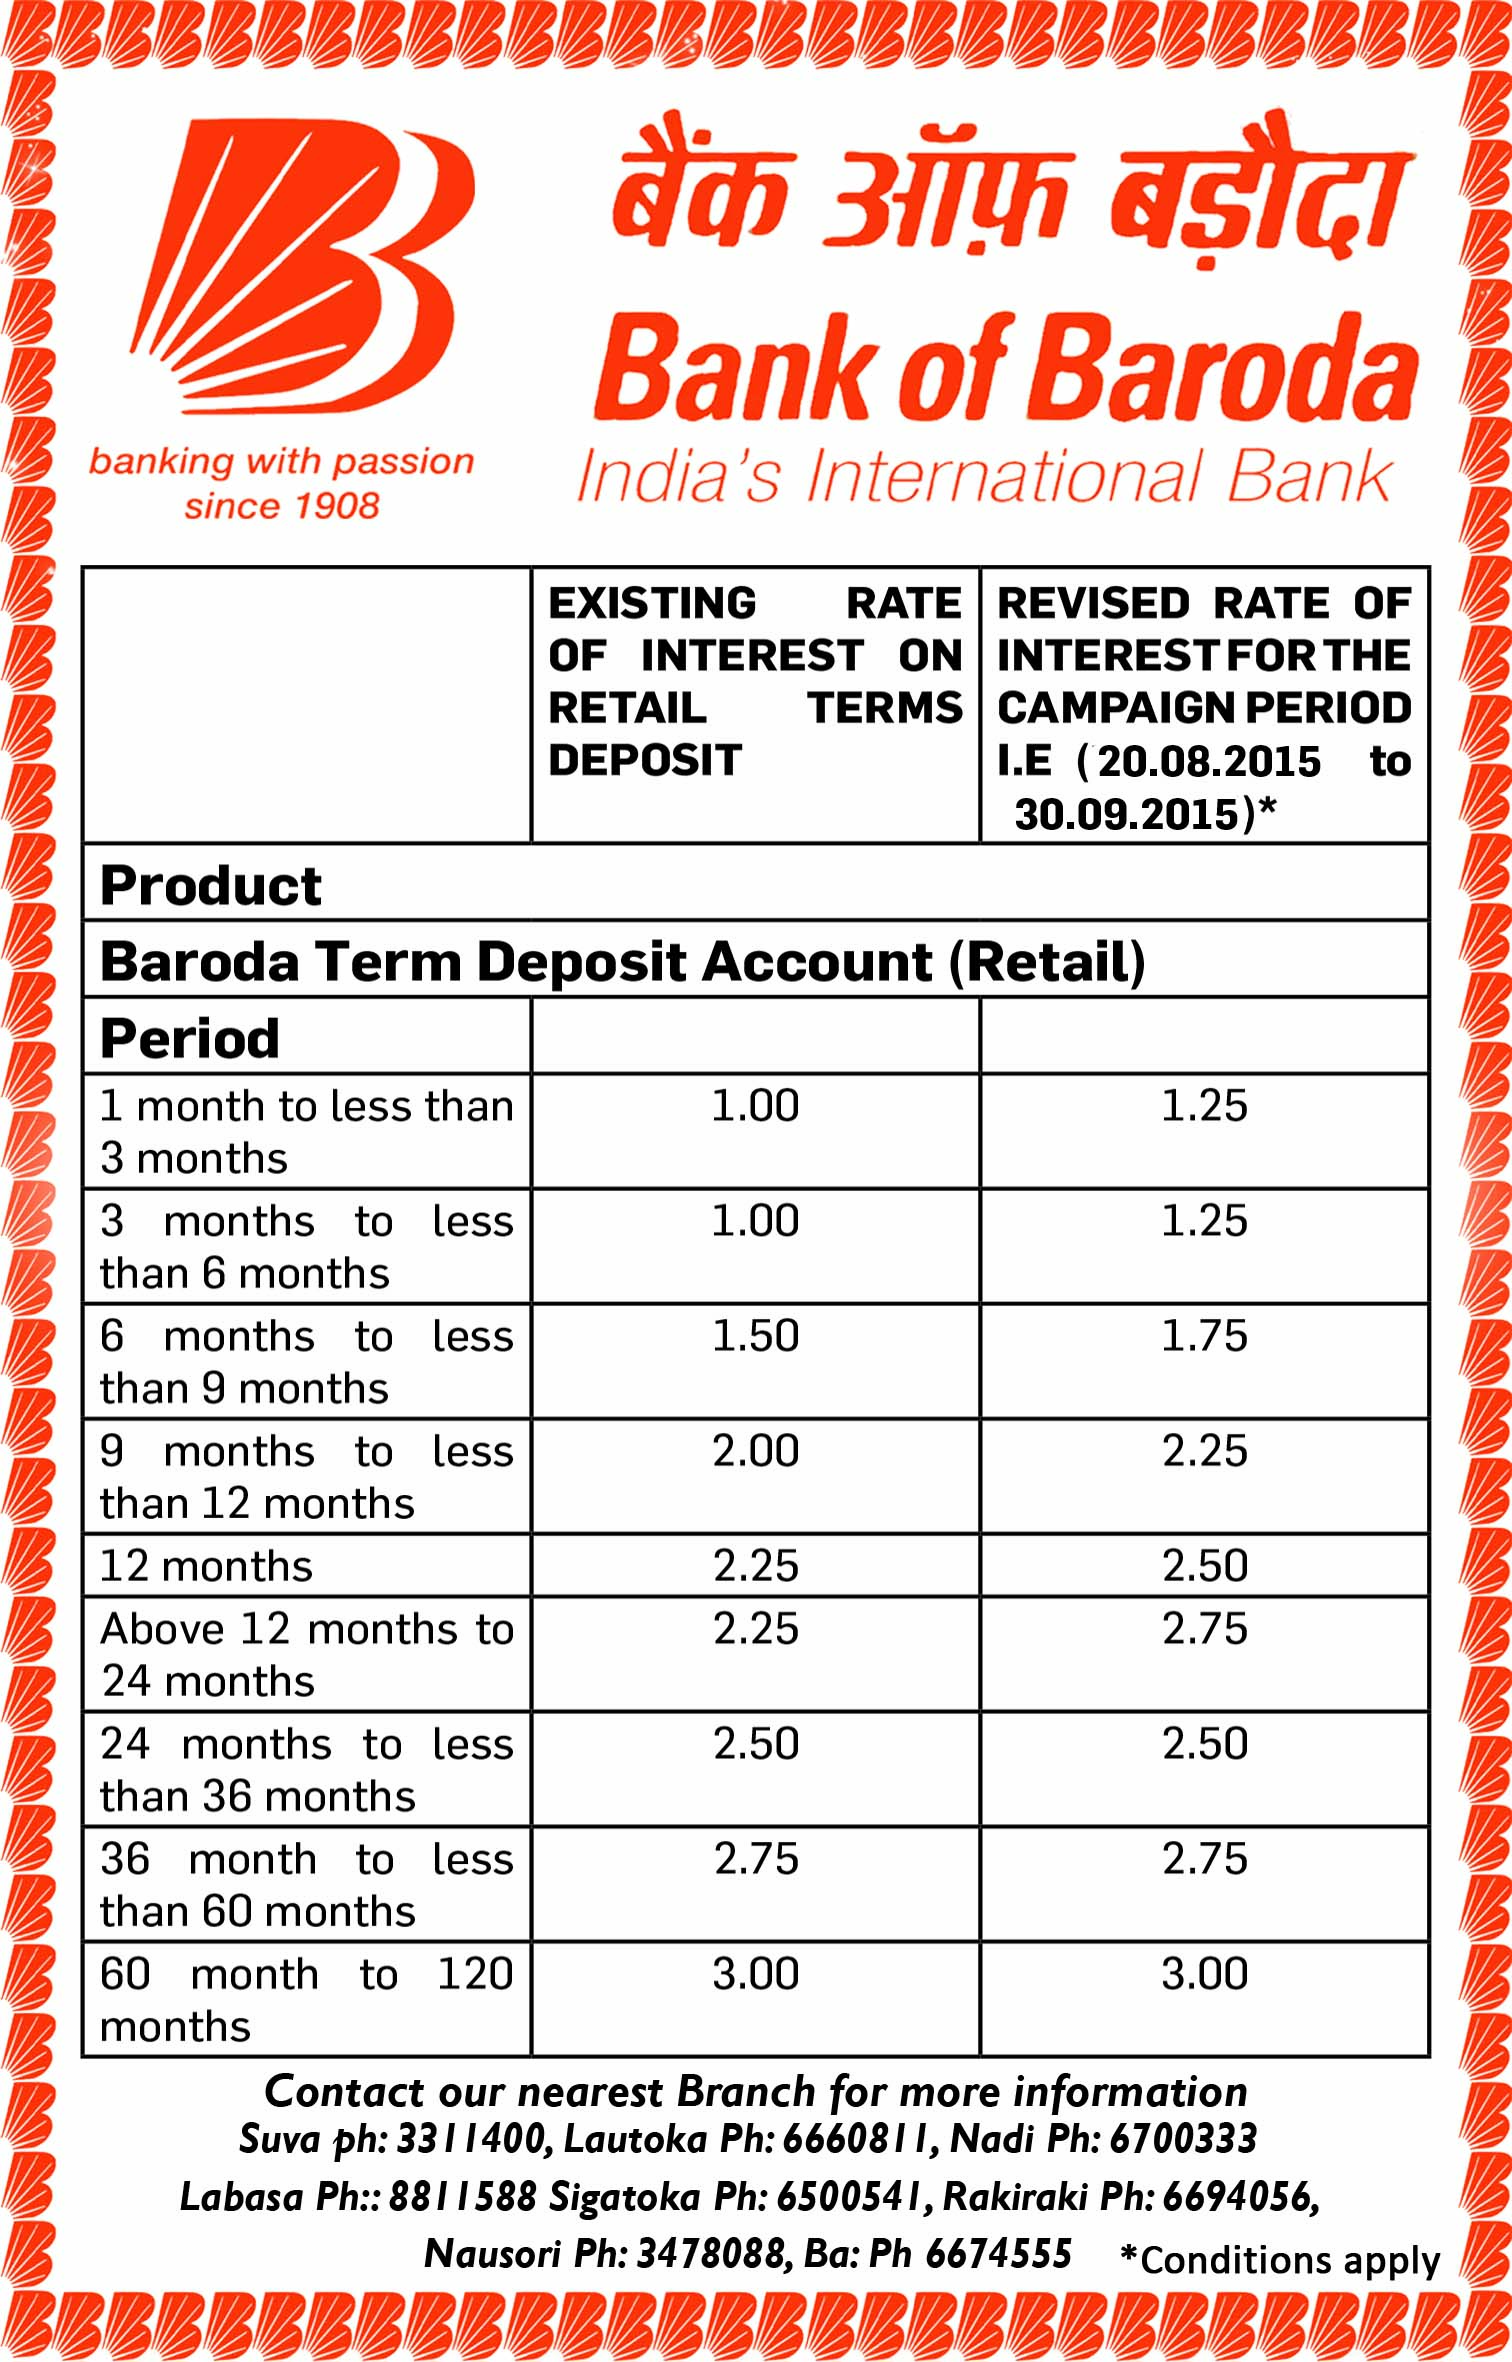 Bank of baroda nre saving account interest rate